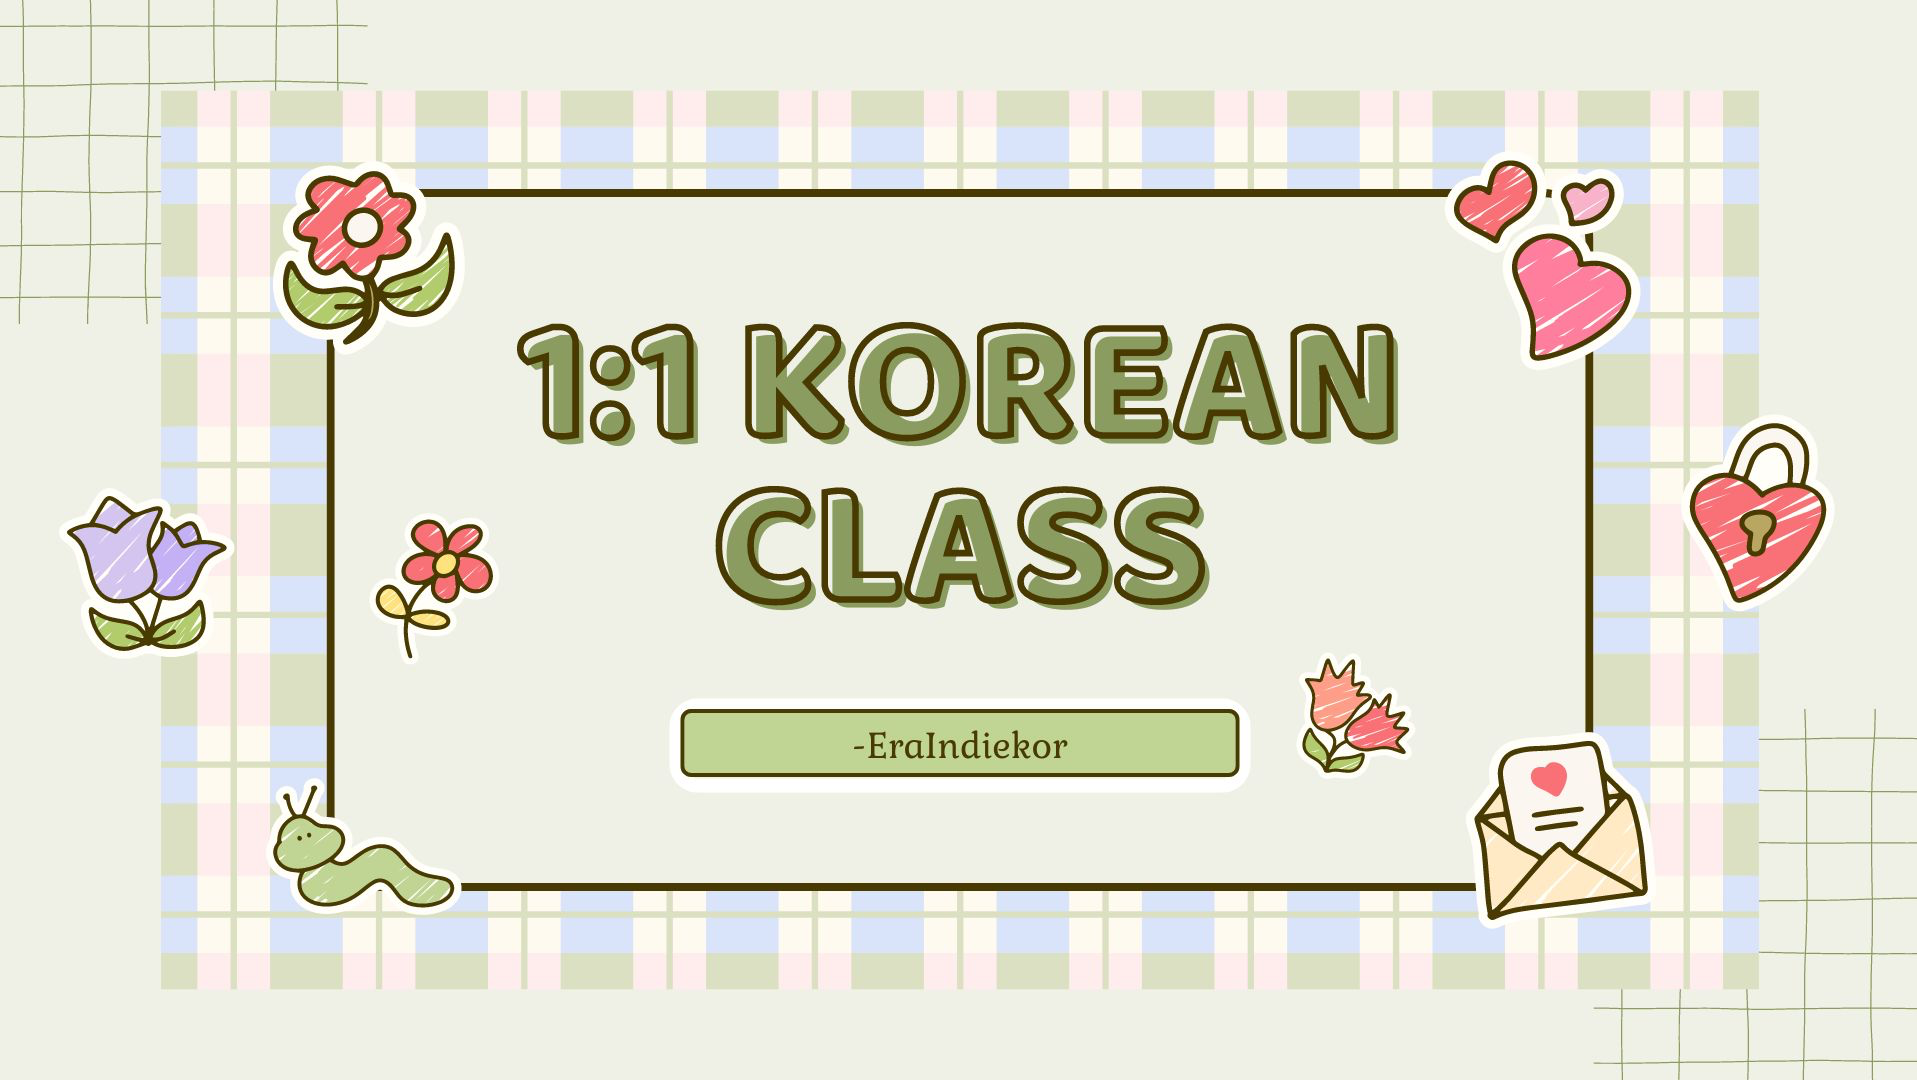 1:1 Korean language class